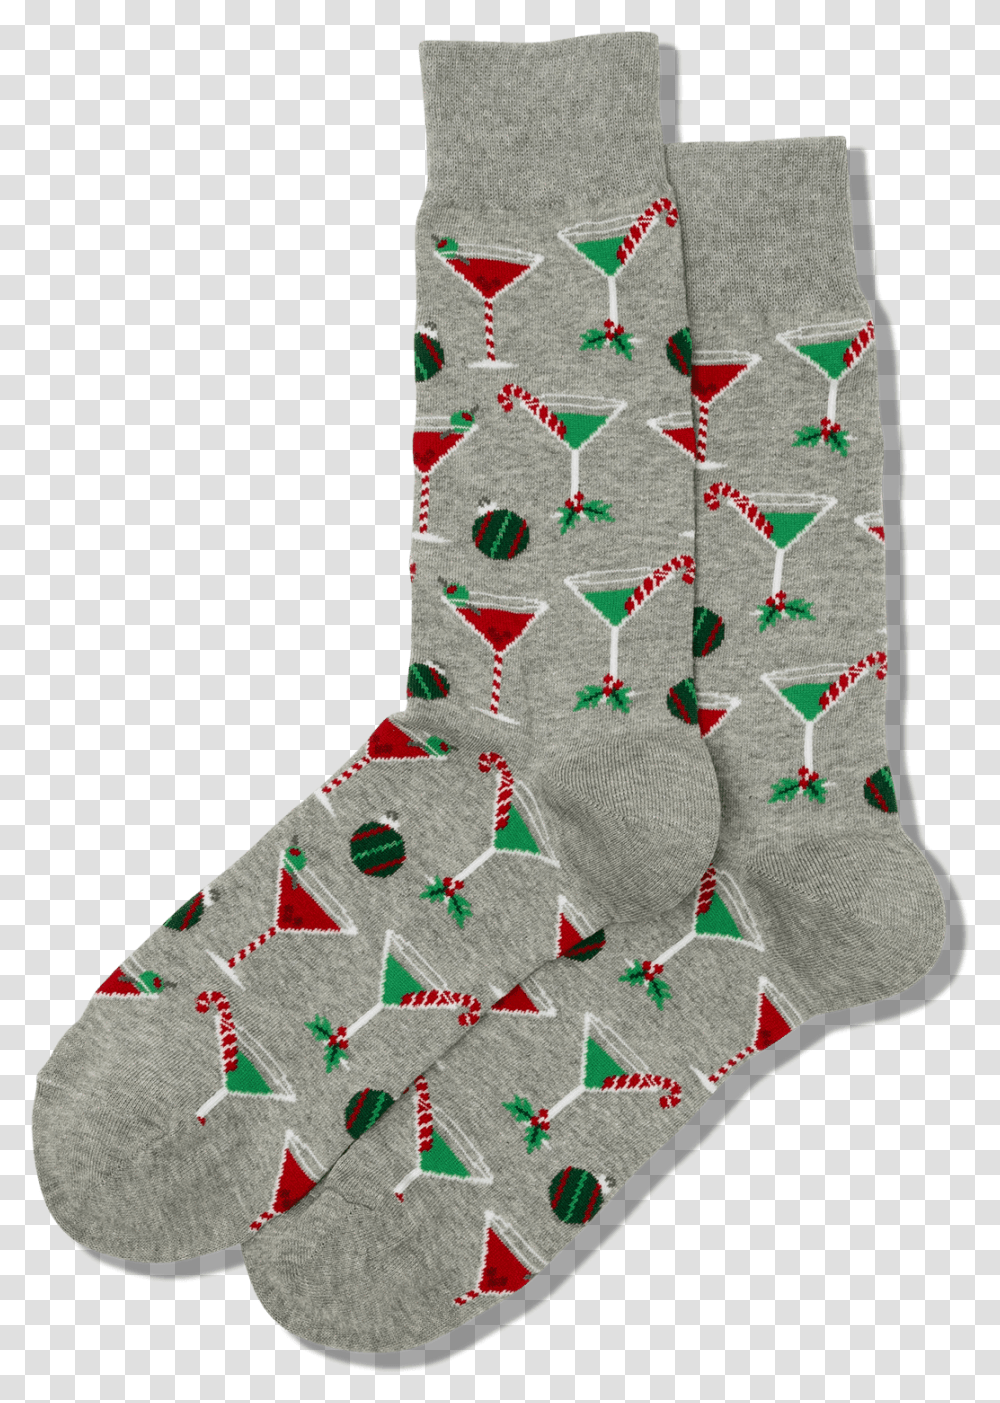 Sock, Stocking, Rug, Christmas Stocking, Gift Transparent Png